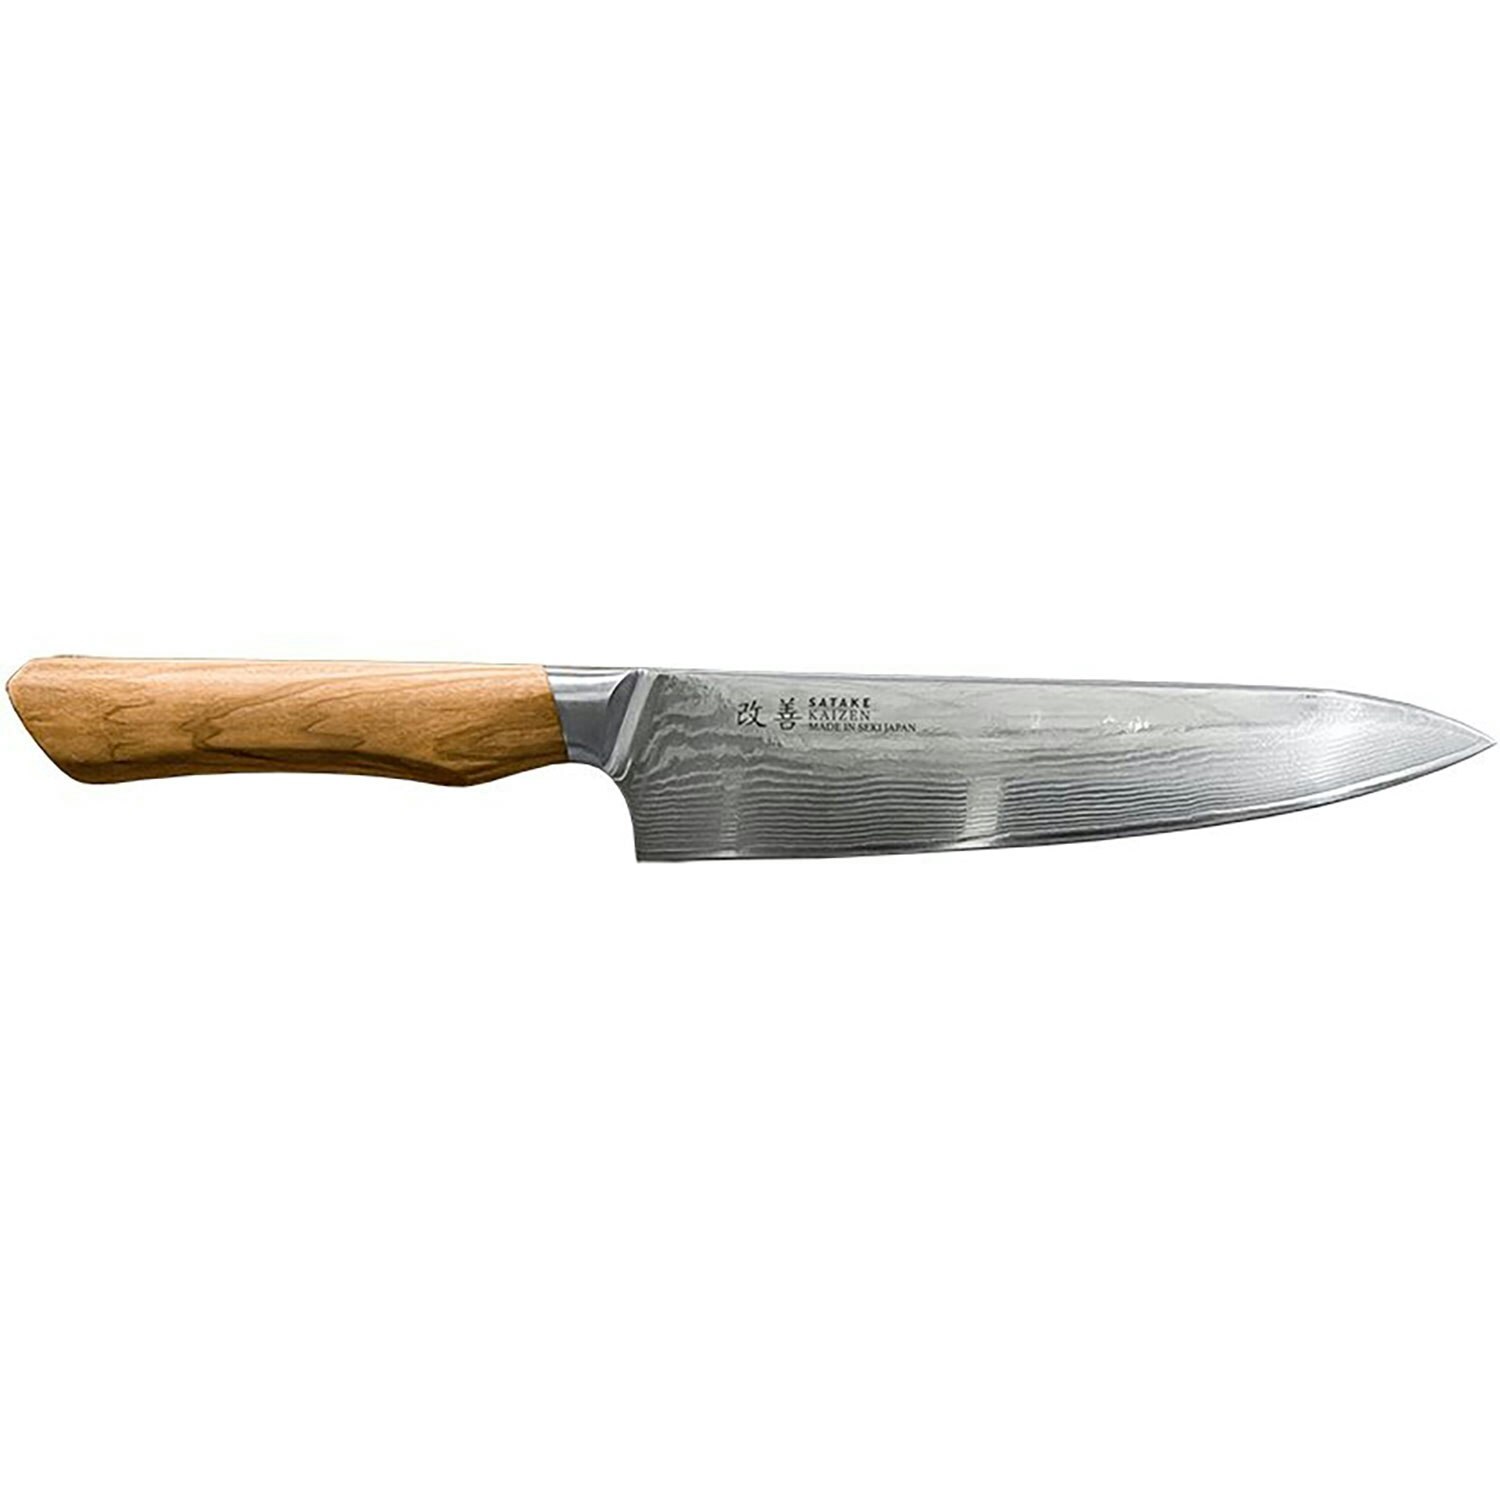 https://royaldesign.com/image/2/satake-satake-kaizen-gyuto-chef-knife-21cm-0